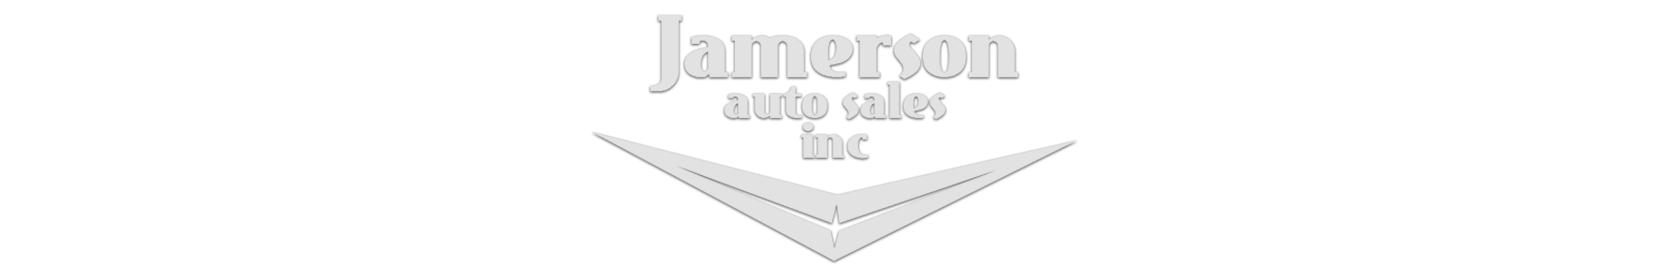 JAMERSON AUTO SALES INC.